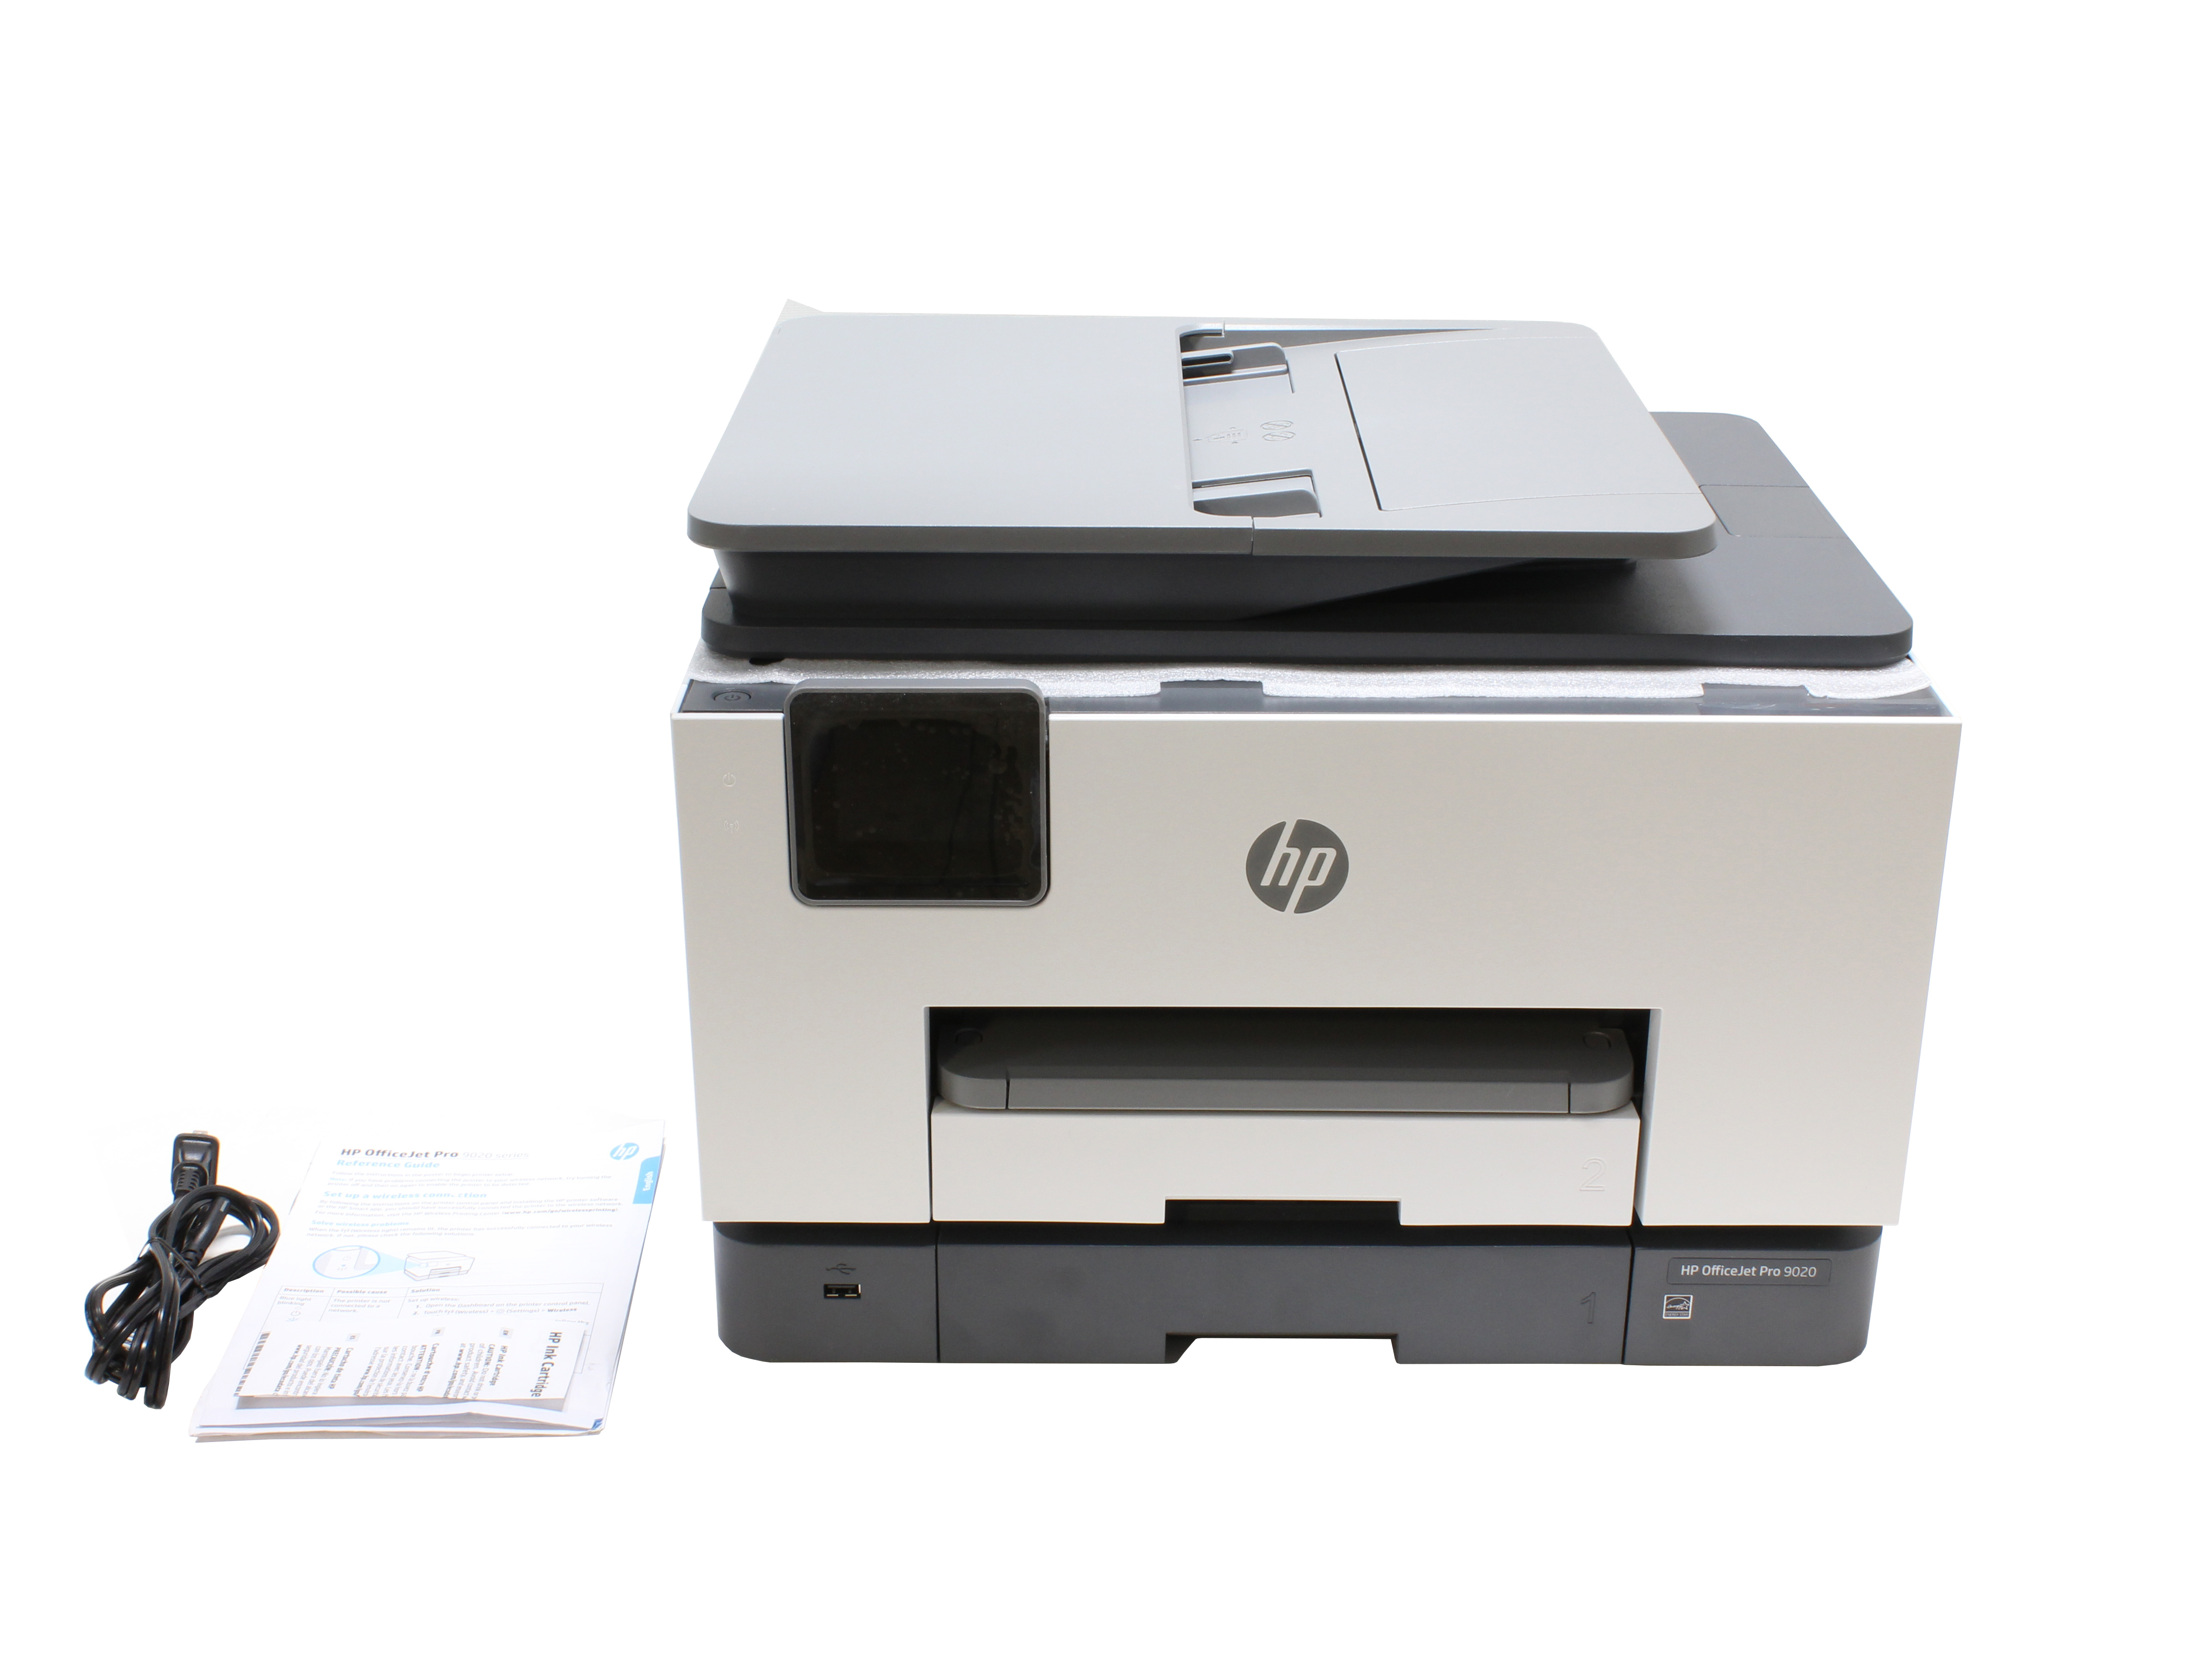 Afgang til Suri skjorte HP Officejet Pro 9020 Wireless Auto-Duplex AIO Color Inkjet Printer  1MR78A#B1H [1MR78A#B1H] - $239.99 : Professional Multi Monitor  Workstations, Graphics Card Experts